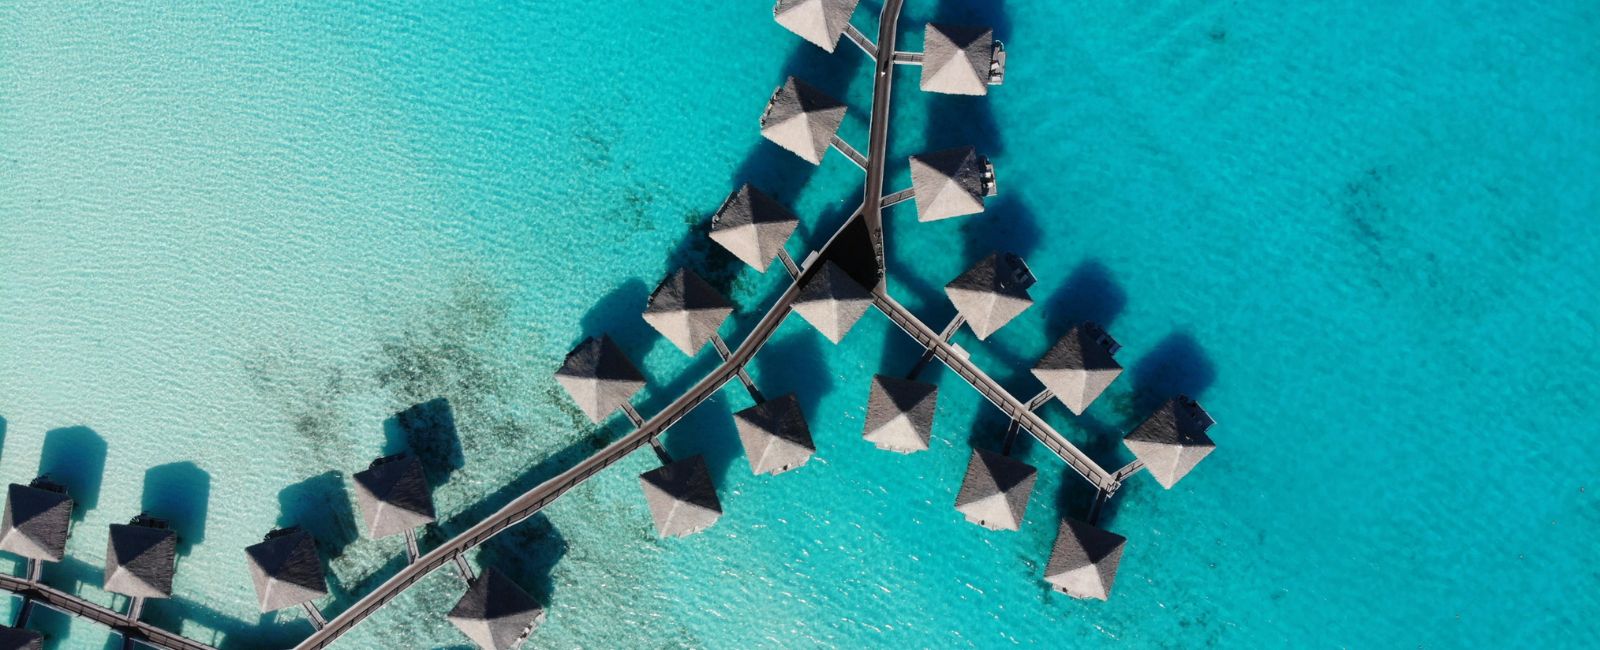 Aerial view of overwater bungalows in Bora Bora, French Polynesia